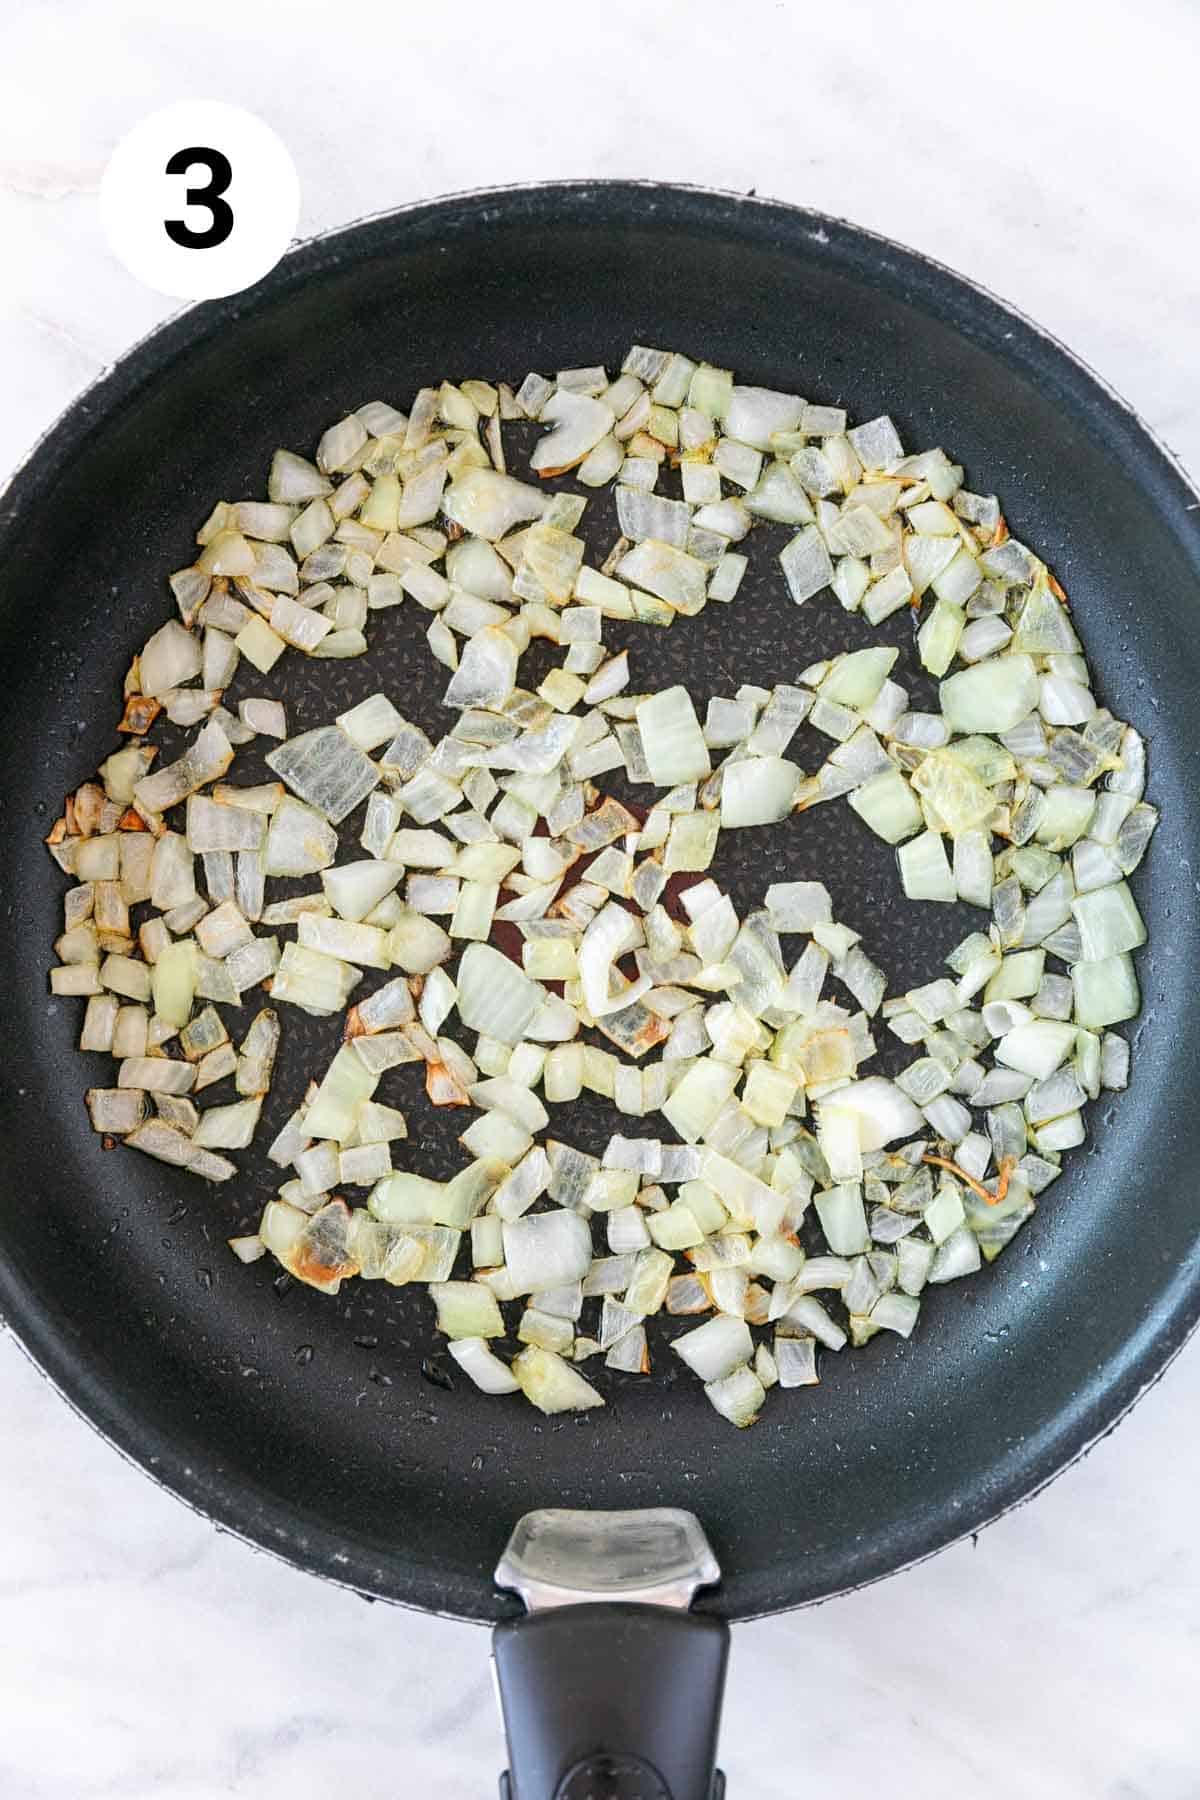 Sautéed onion in a skillet.